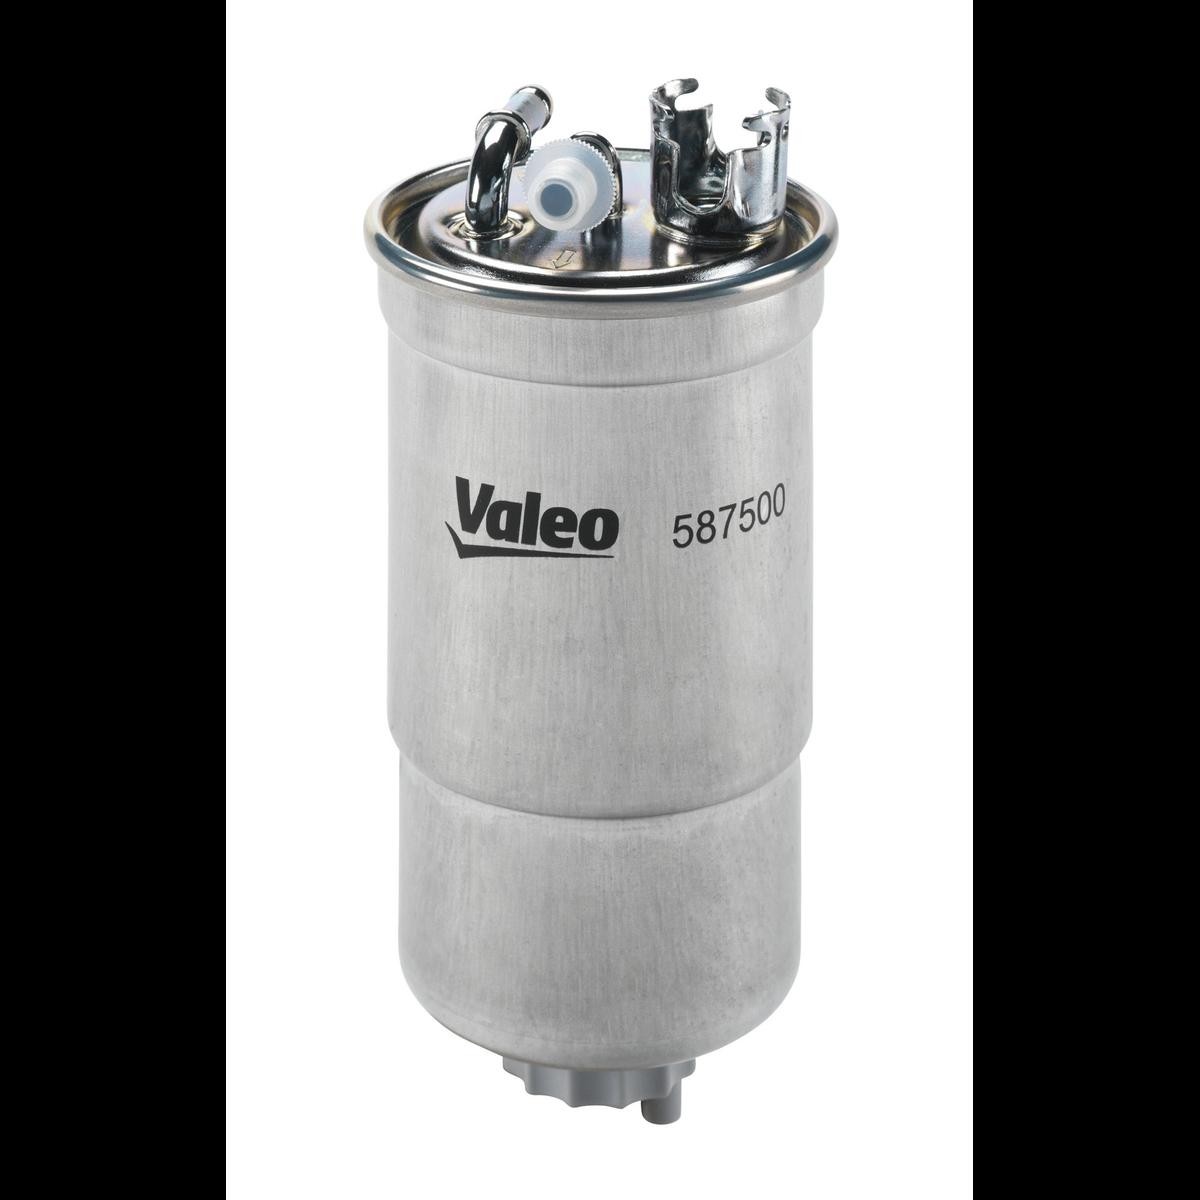 VALEO 587500 Fuel filter In-Line Filter, 9mm, 9mm